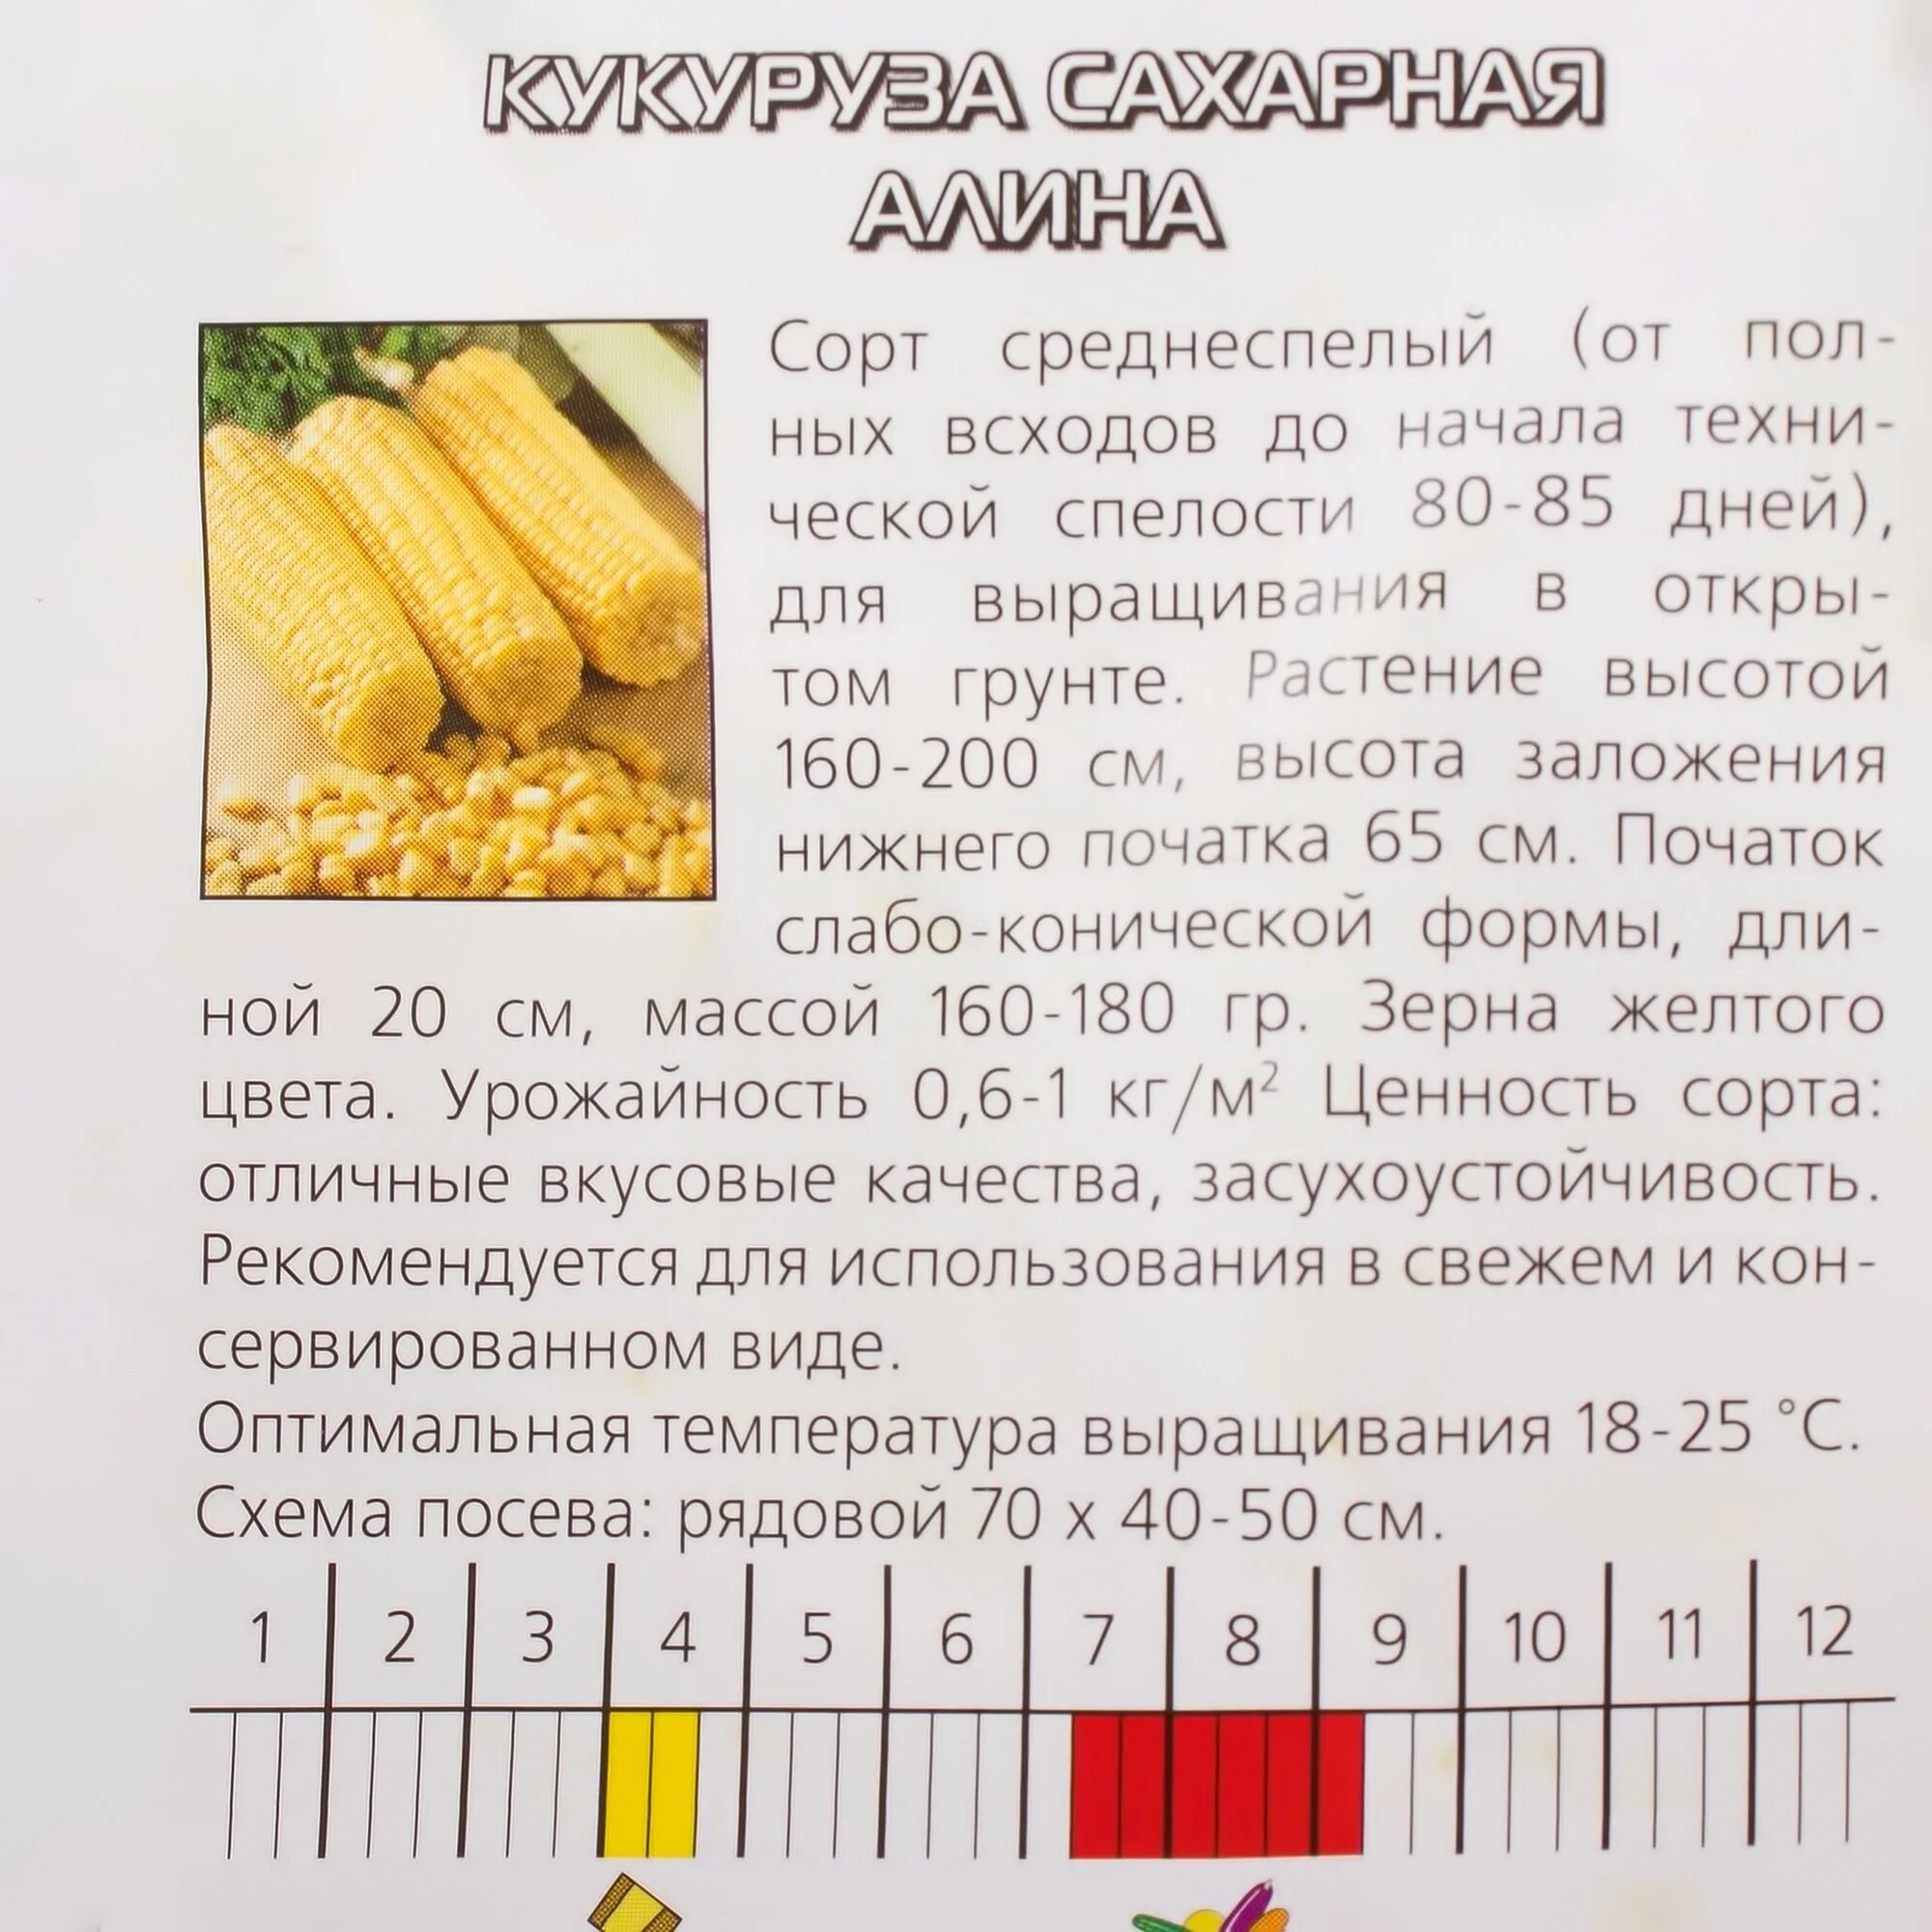 Семена кукурузы какую температуру. Размер кукурузы.